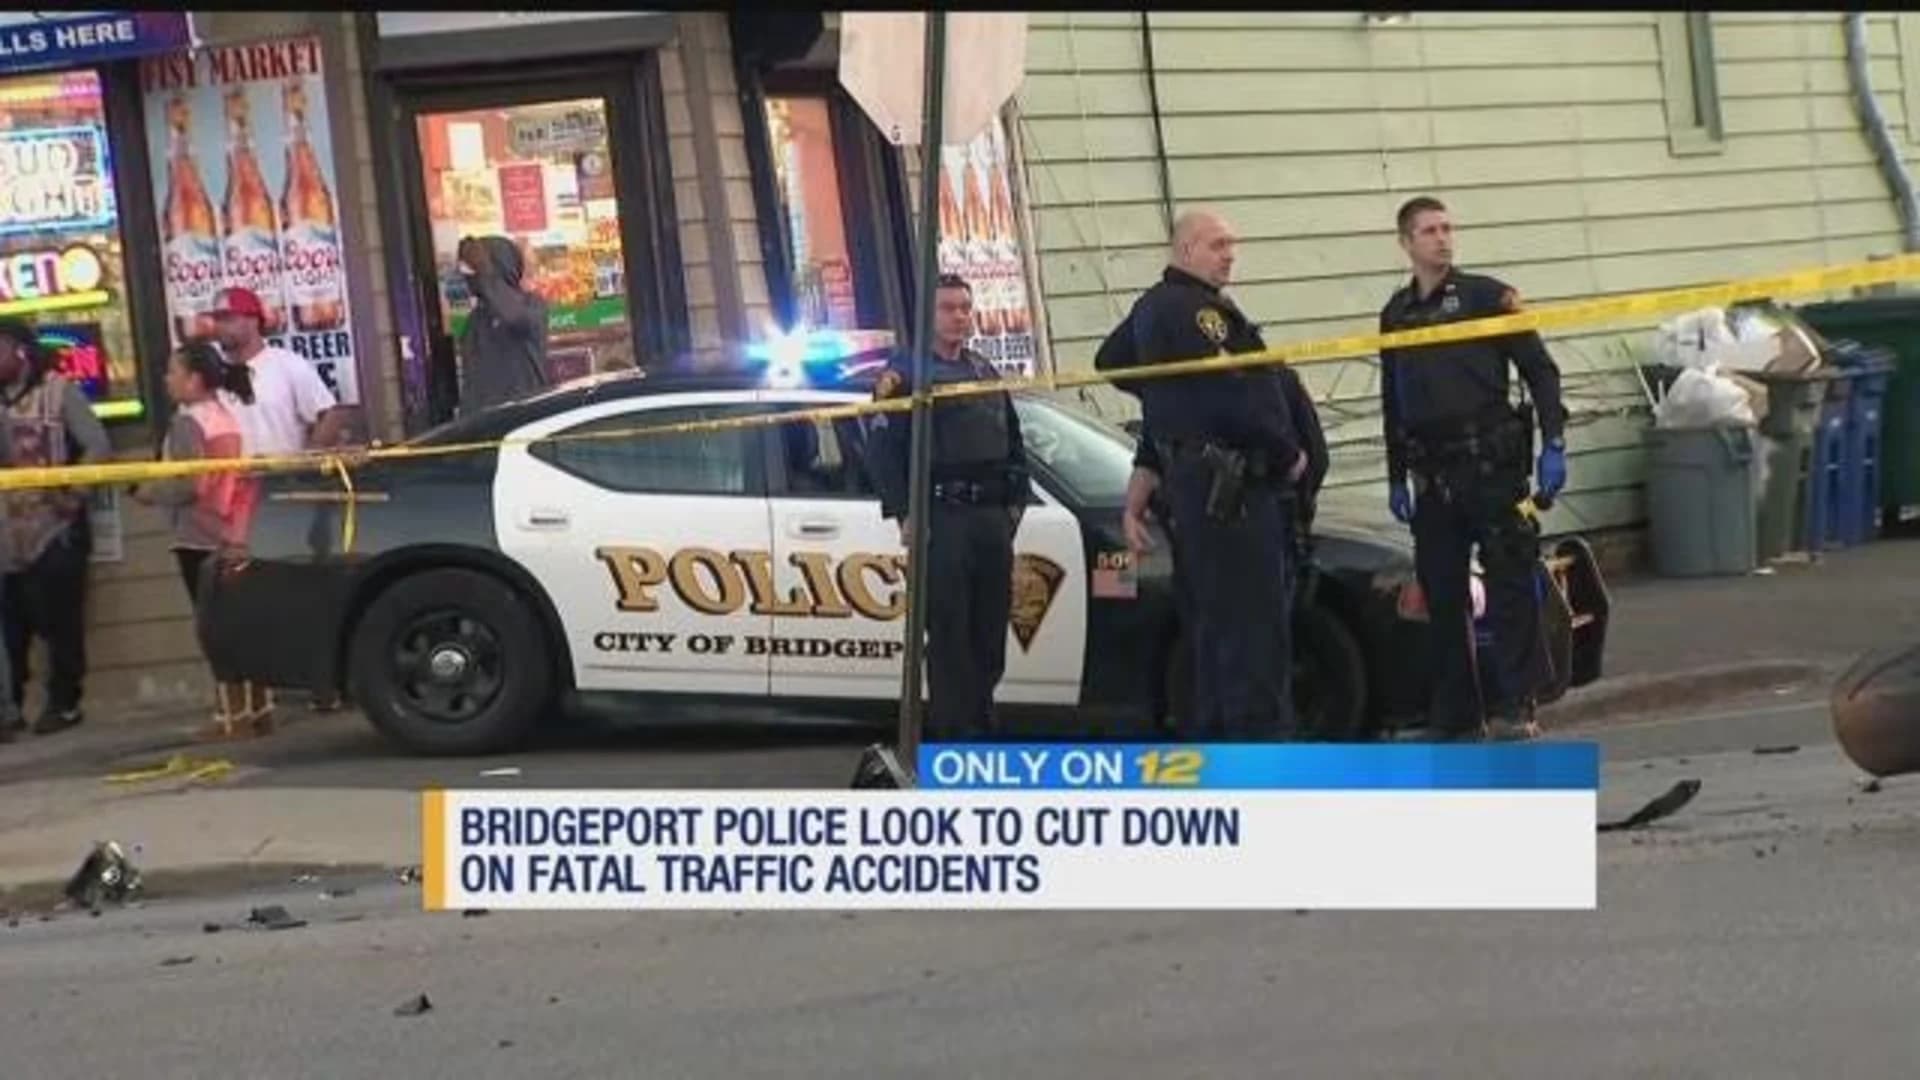 Bridgeport police ask public for help keeping city streets safe